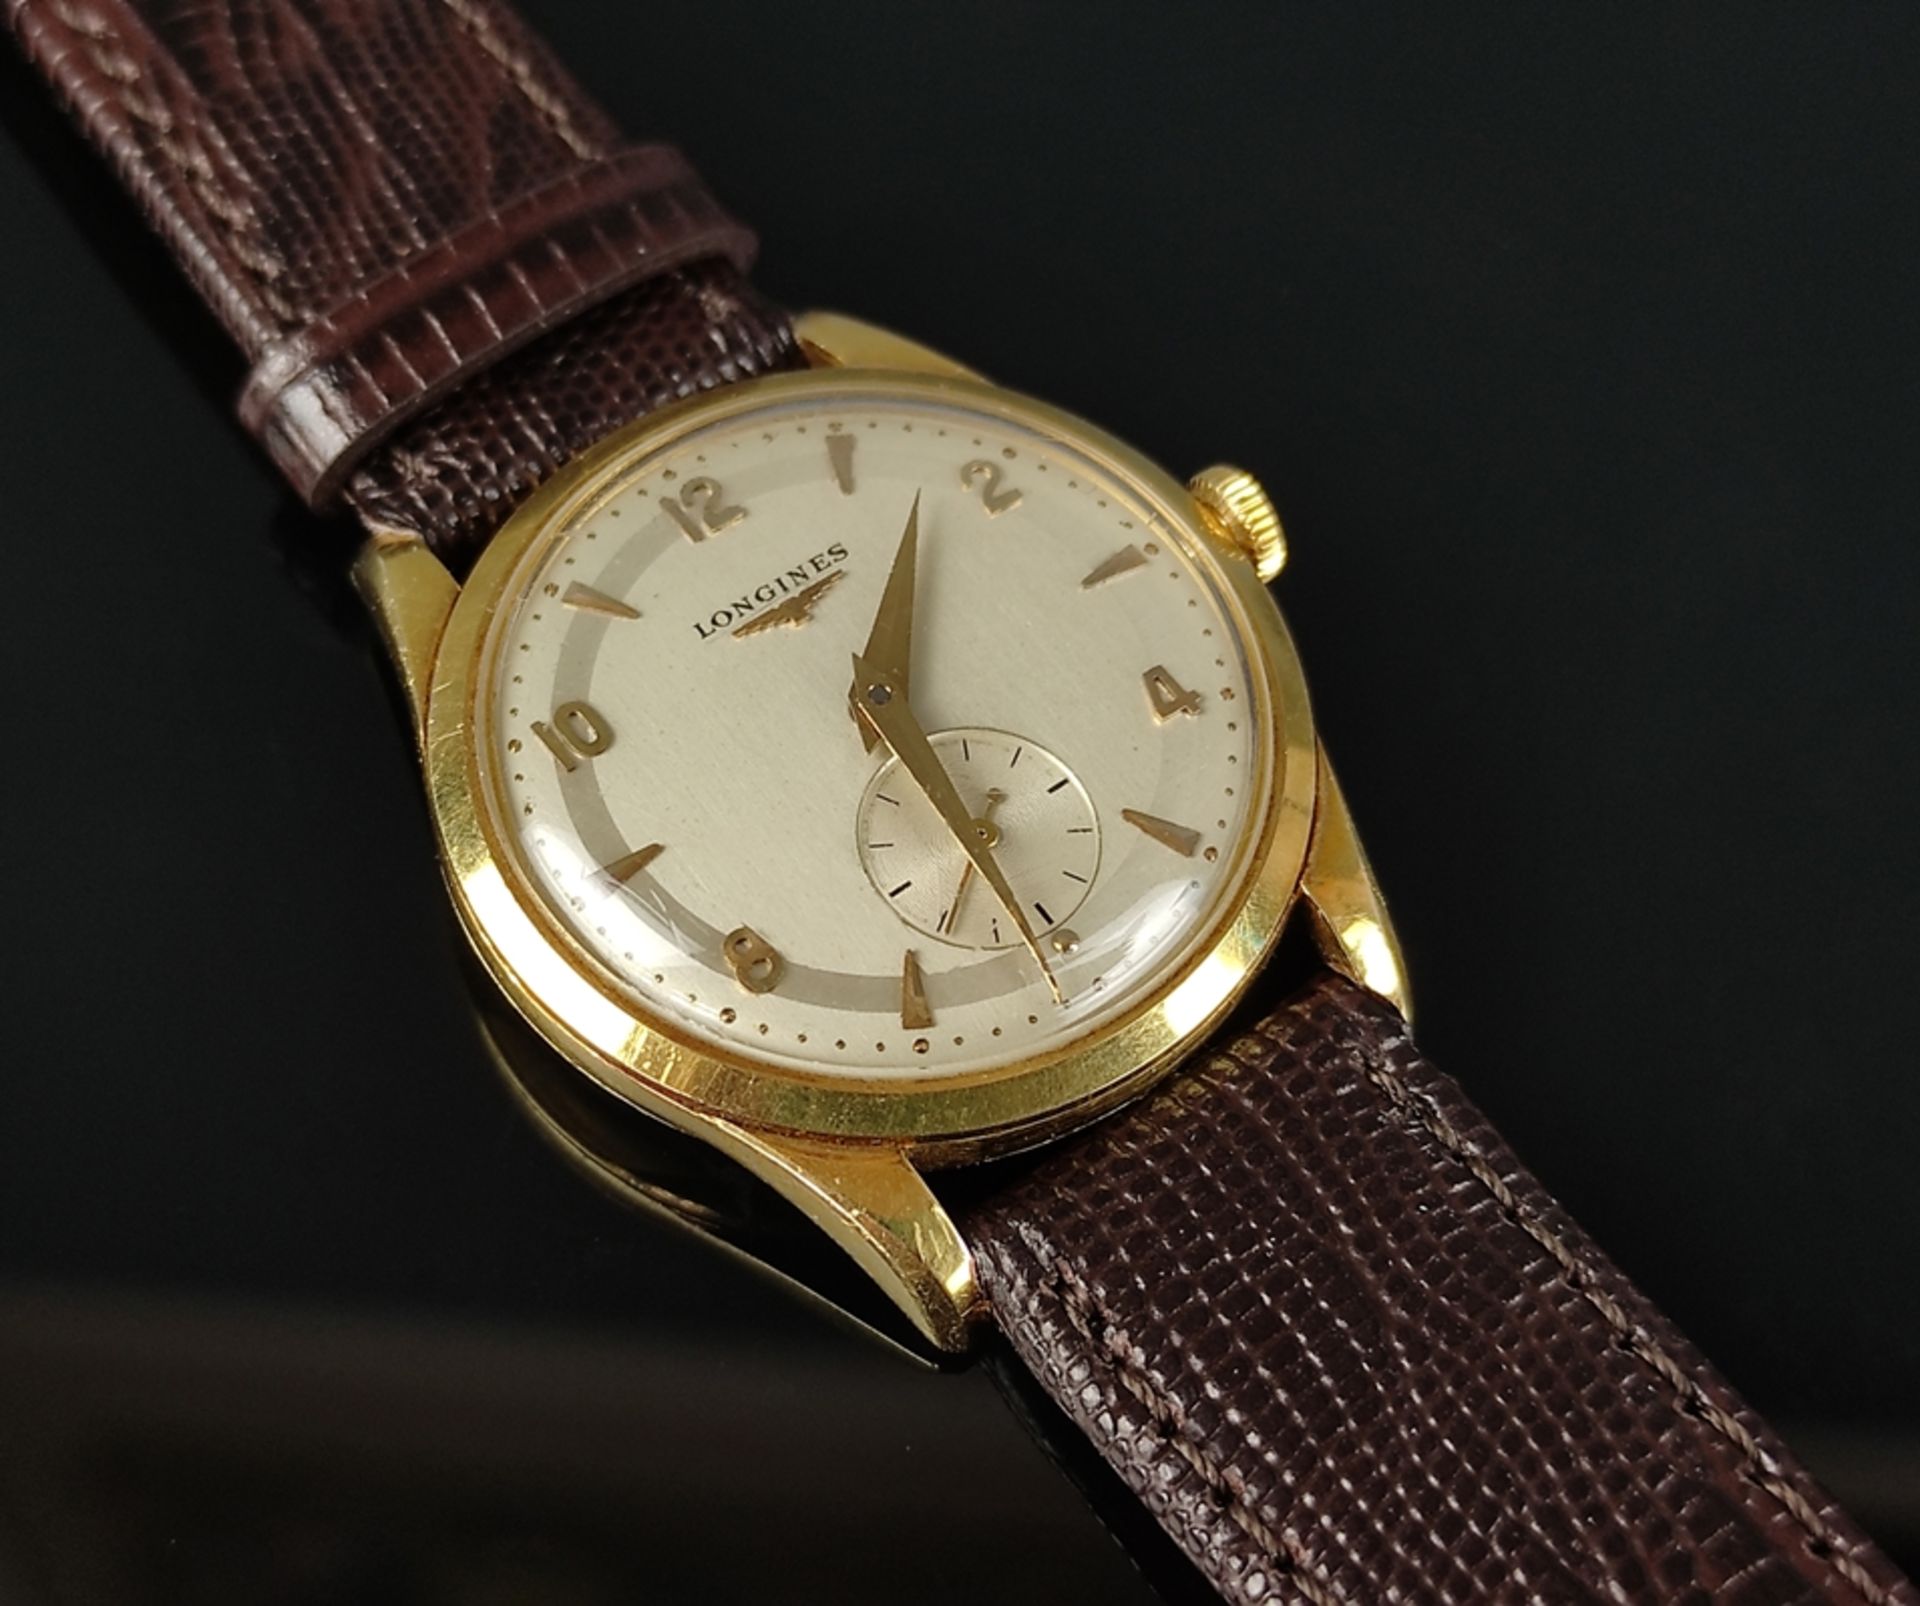 Wristwatch, Longines Calatrava, 8878651 caliber 23Z, 750/18K gold case, clock face with gold indice - Image 3 of 5